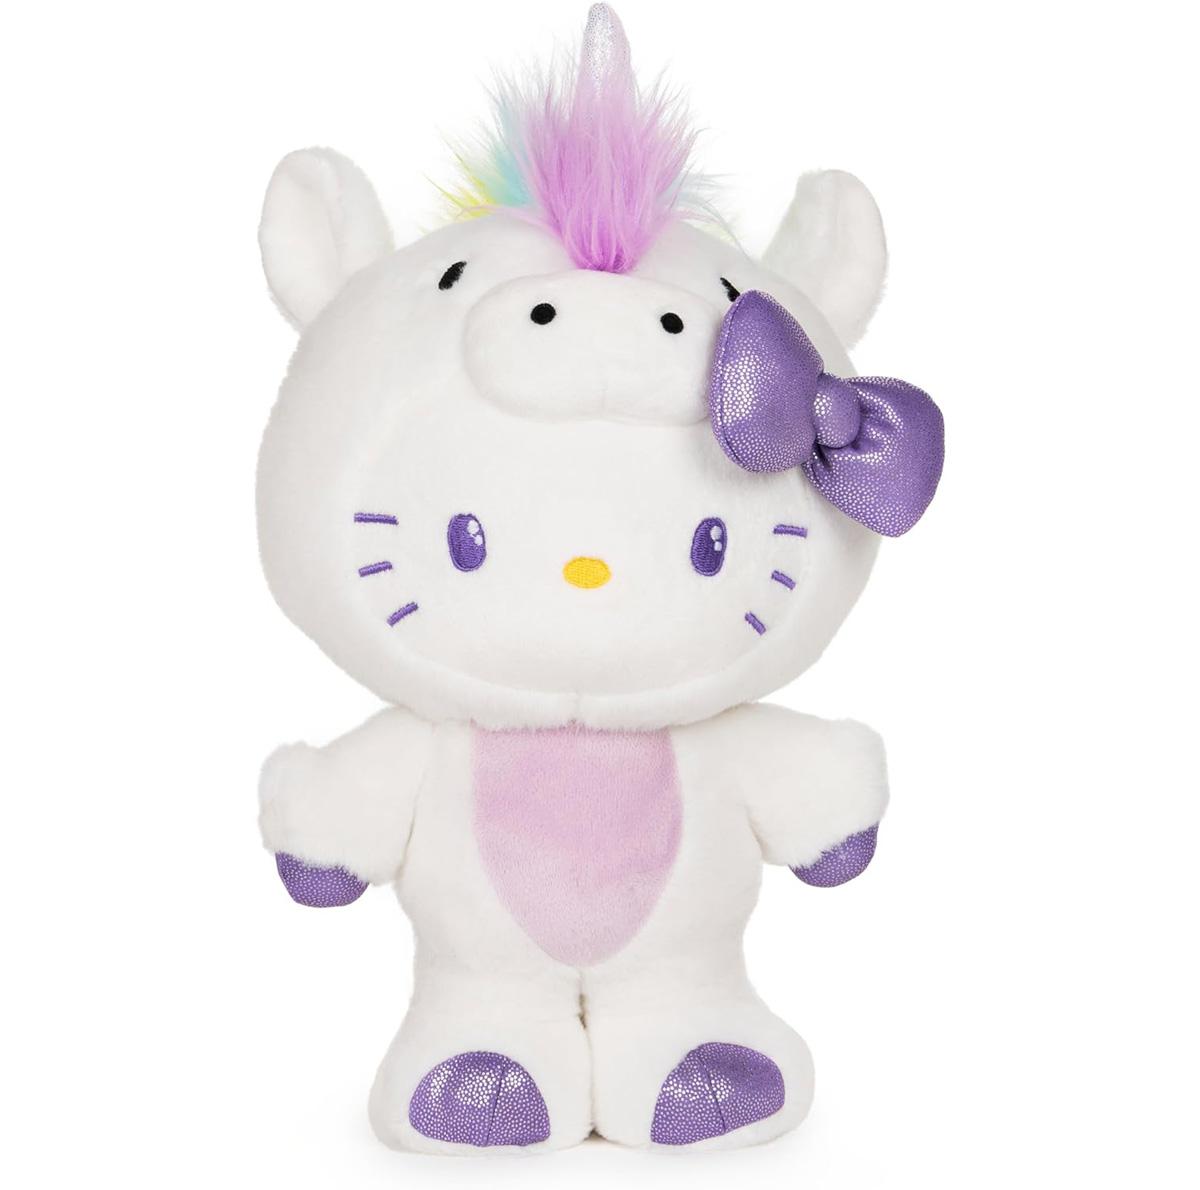 Gund Sanrio Hello Kitty Unicorn Plush Stuffed Animal for $13.84